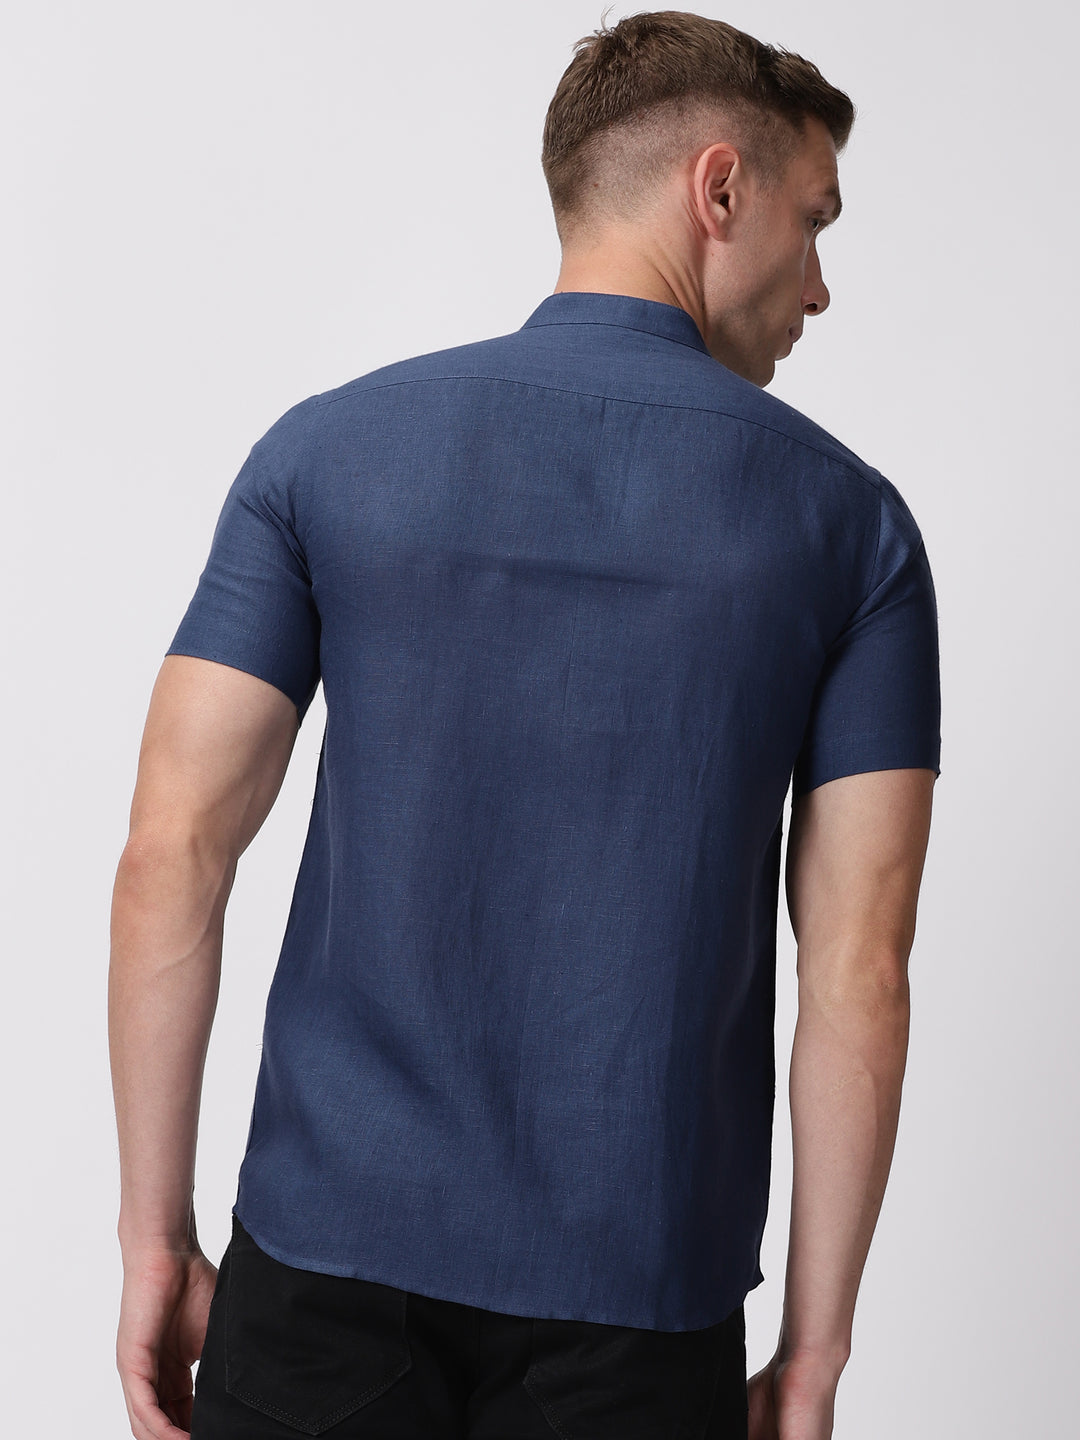 Ronan - Pure Linen Mandarin Collar Half Sleeve Shirt - Denim Blue